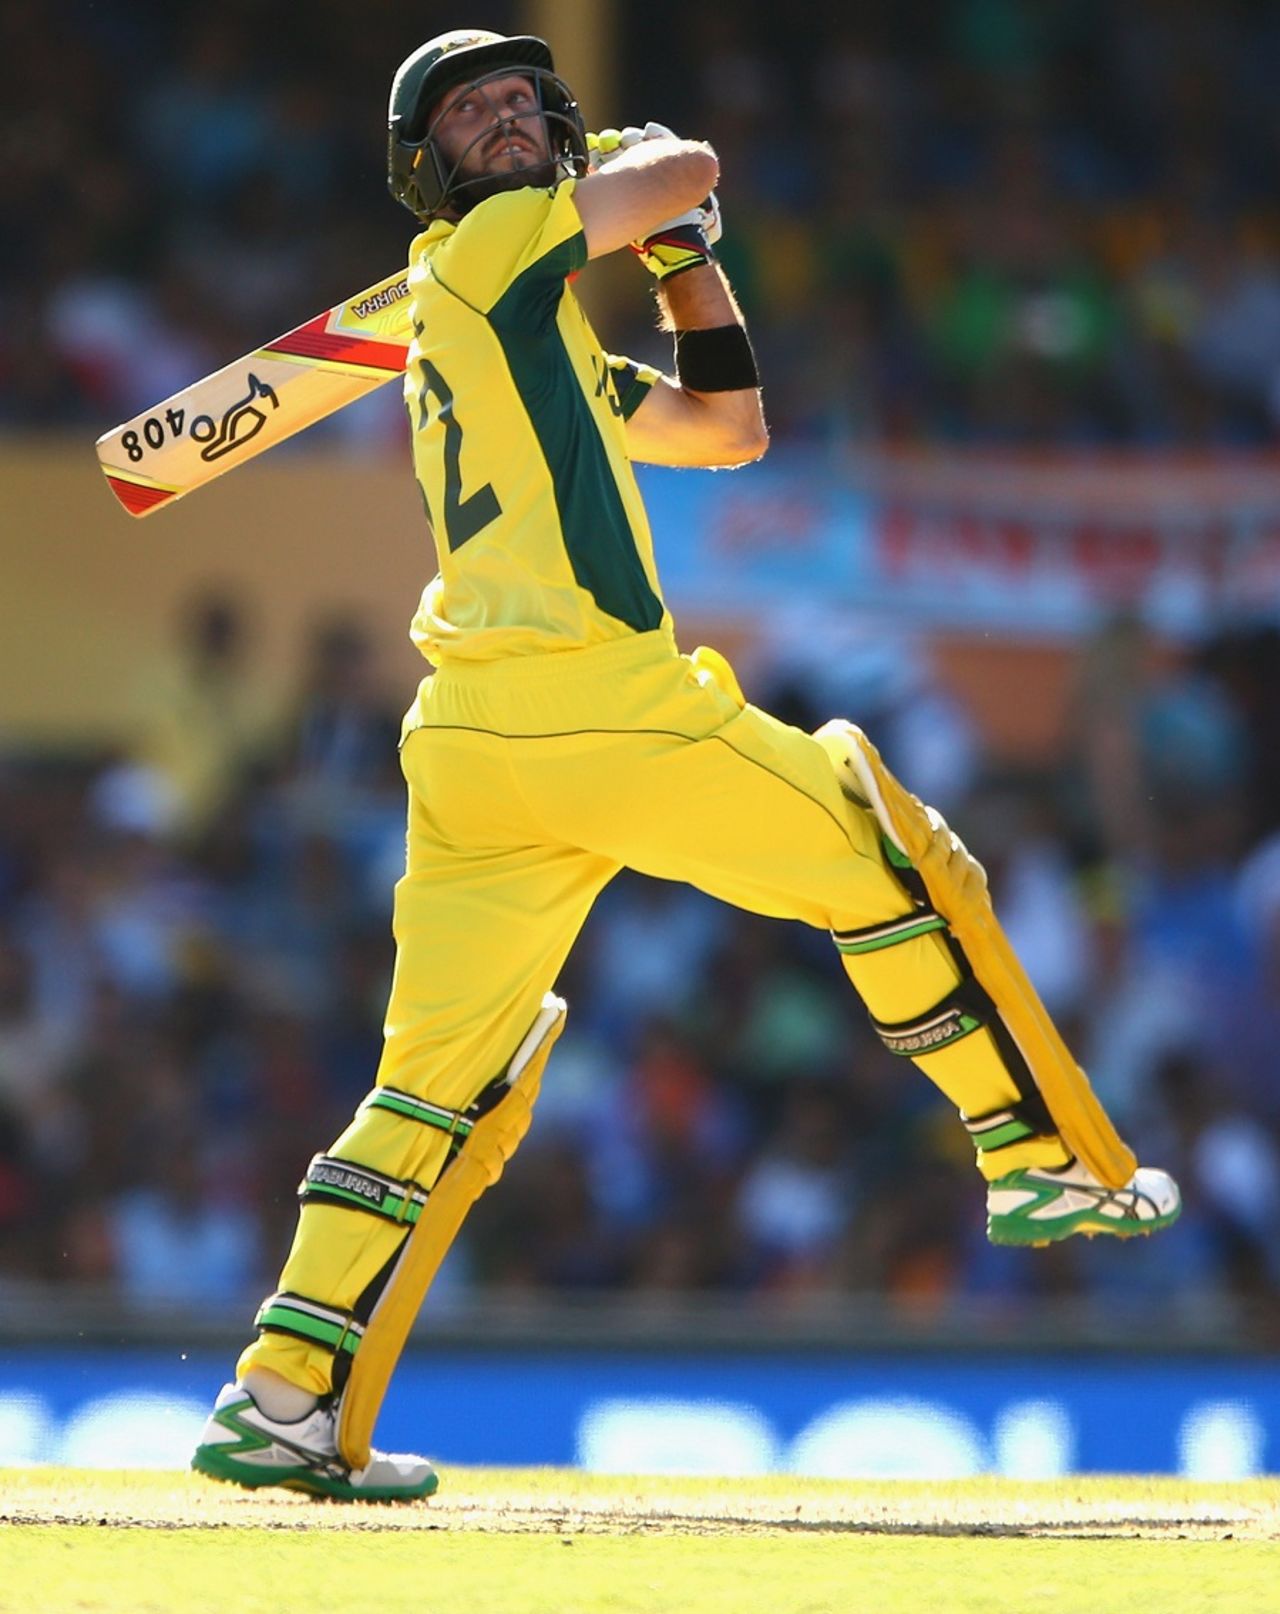 Glenn Maxwell struck 23 off 14 balls, Australia v India, World Cup 2015, 2nd semi-final, Sydney, March 26, 2015